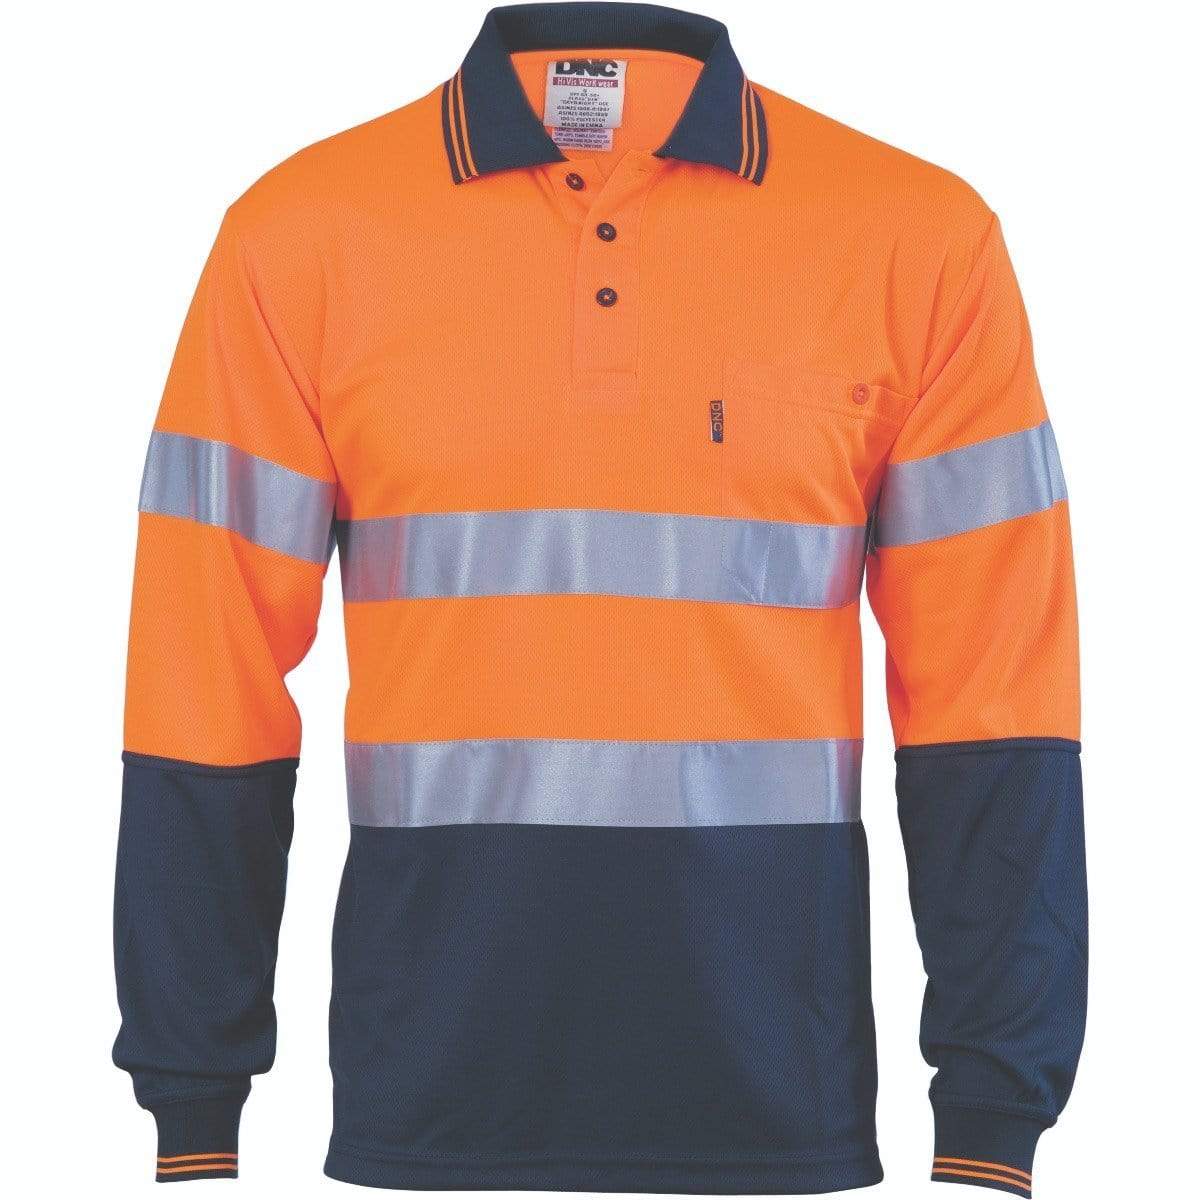 Dnc Workwear Hi-vis D/n Cool Breathe Long Sleeve Polo Shirt With Csr R/tape - 3716 Work Wear DNC Workwear Orange/Navy XS 